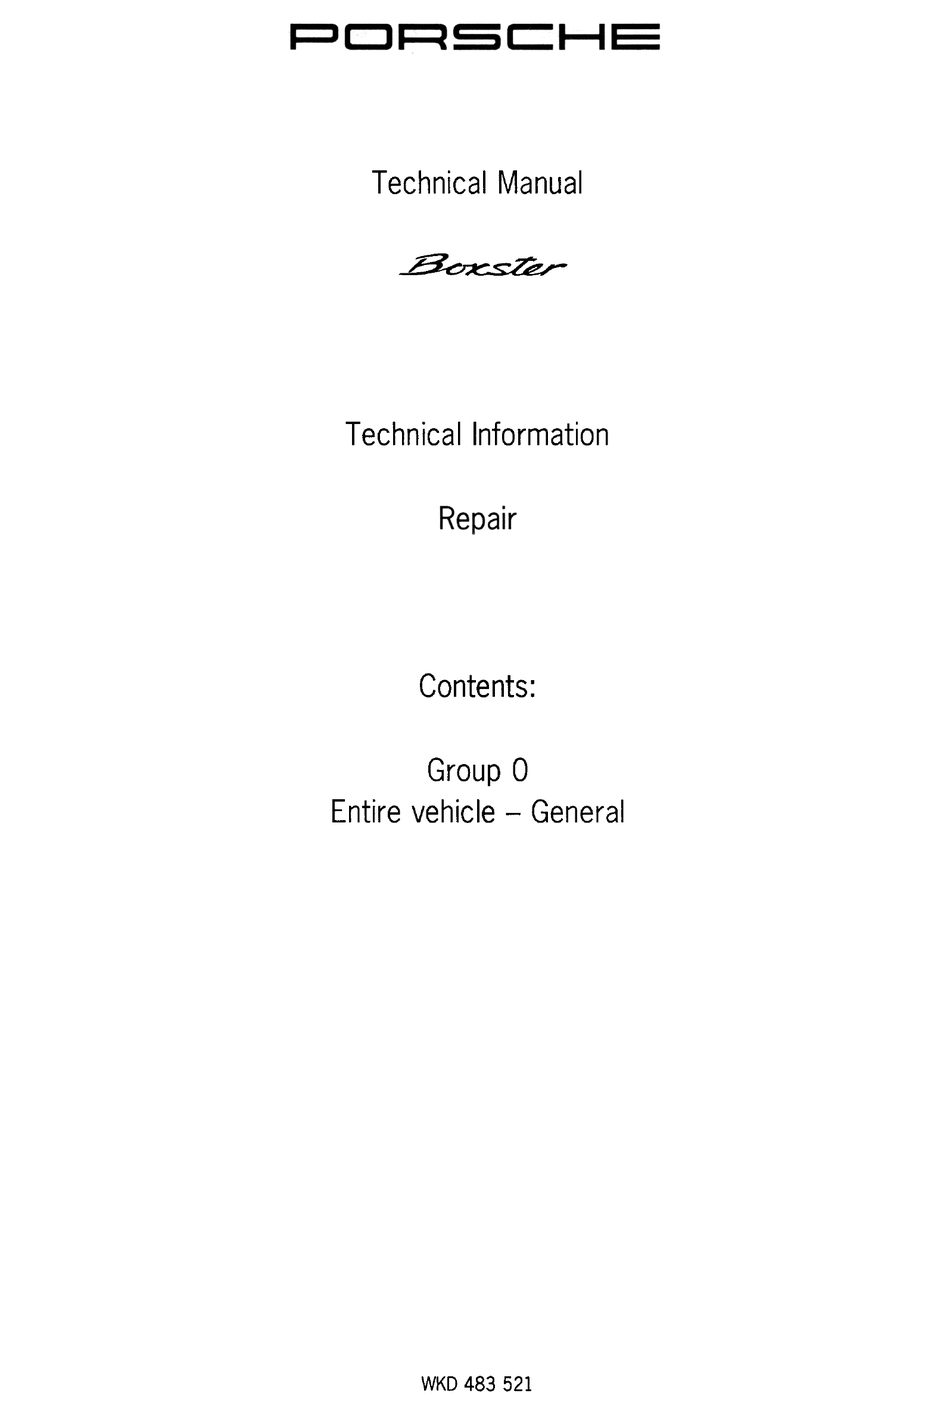 PORSCHE BOXSTER 1999 TECHNICAL MANUAL Pdf Download | ManualsLib